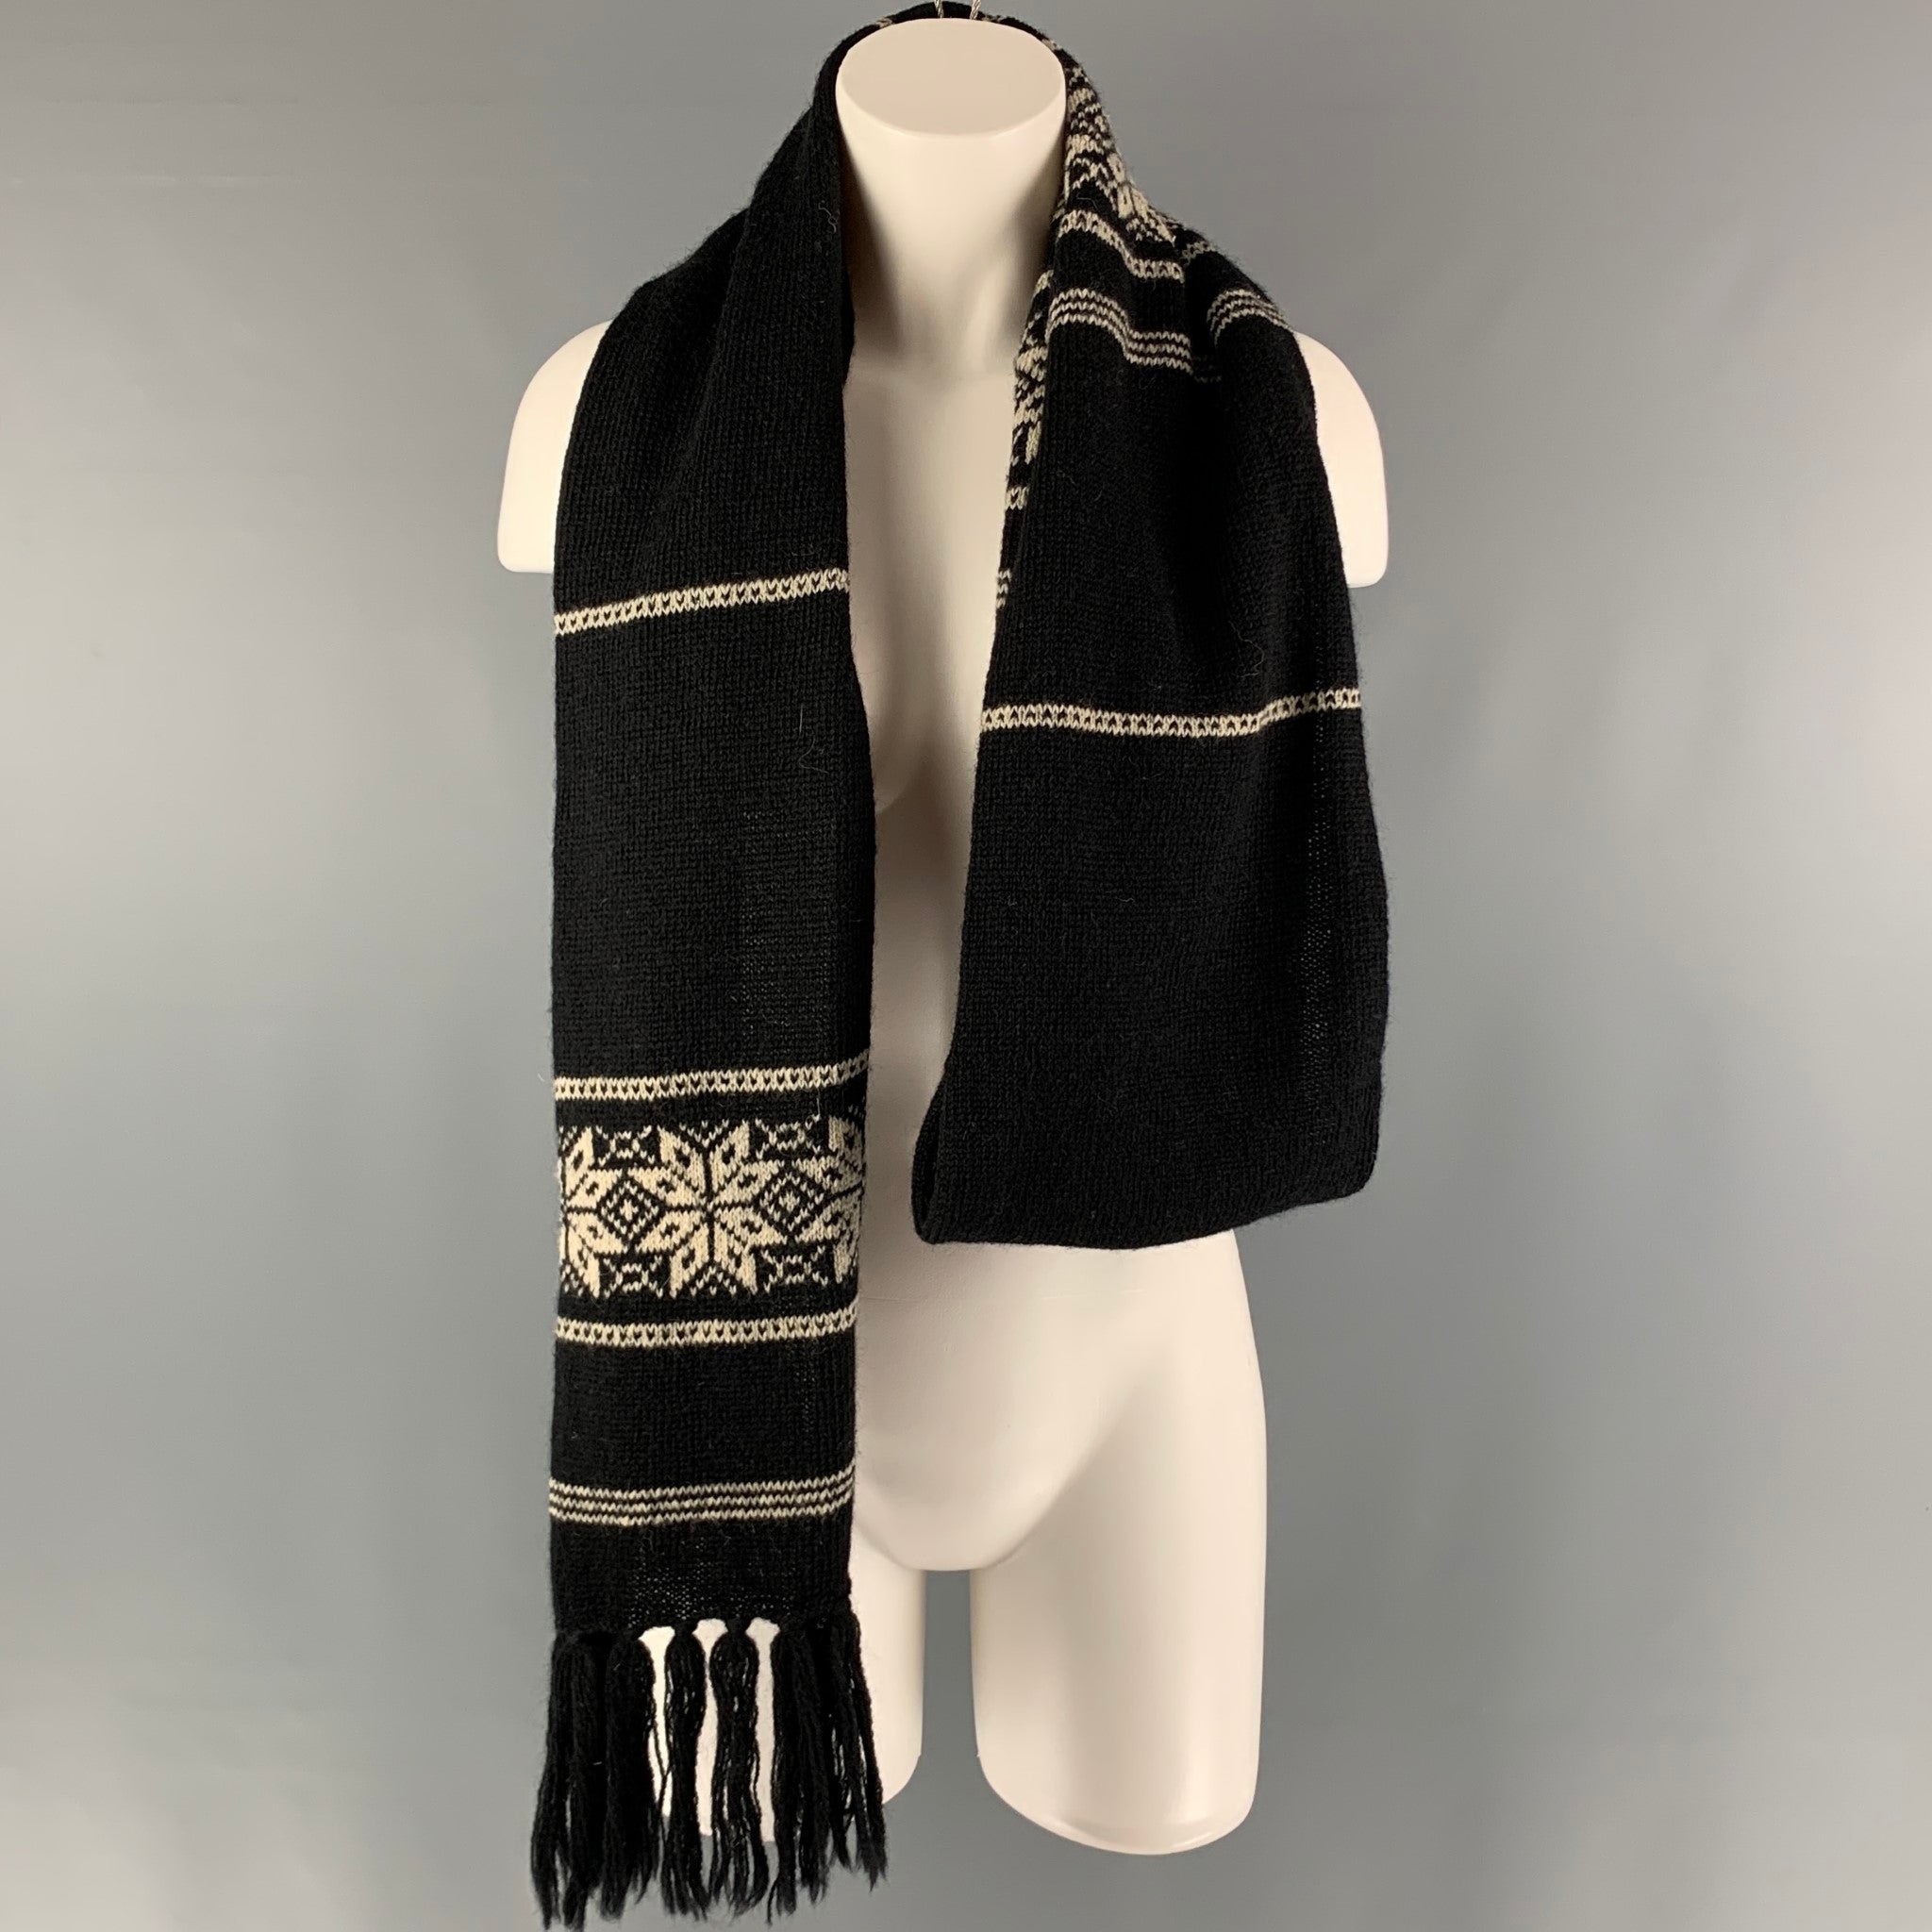 Receipts of my items  Fendi top, Louis vuitton scarf, Prada